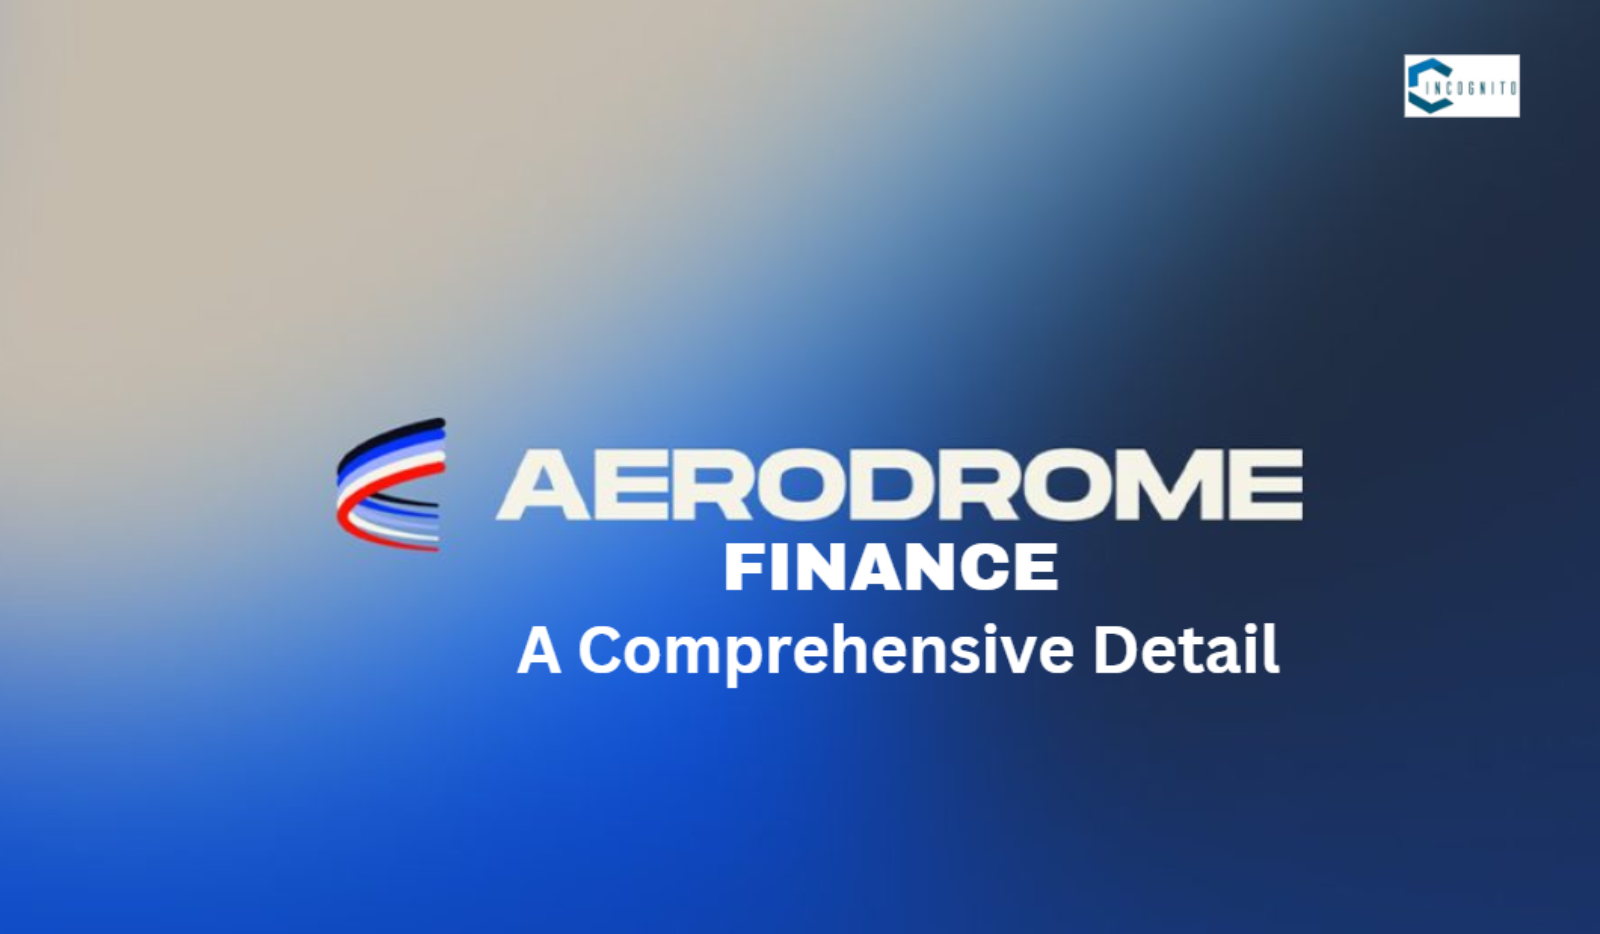 Aerodrome Finance: A Comprehensive Detail